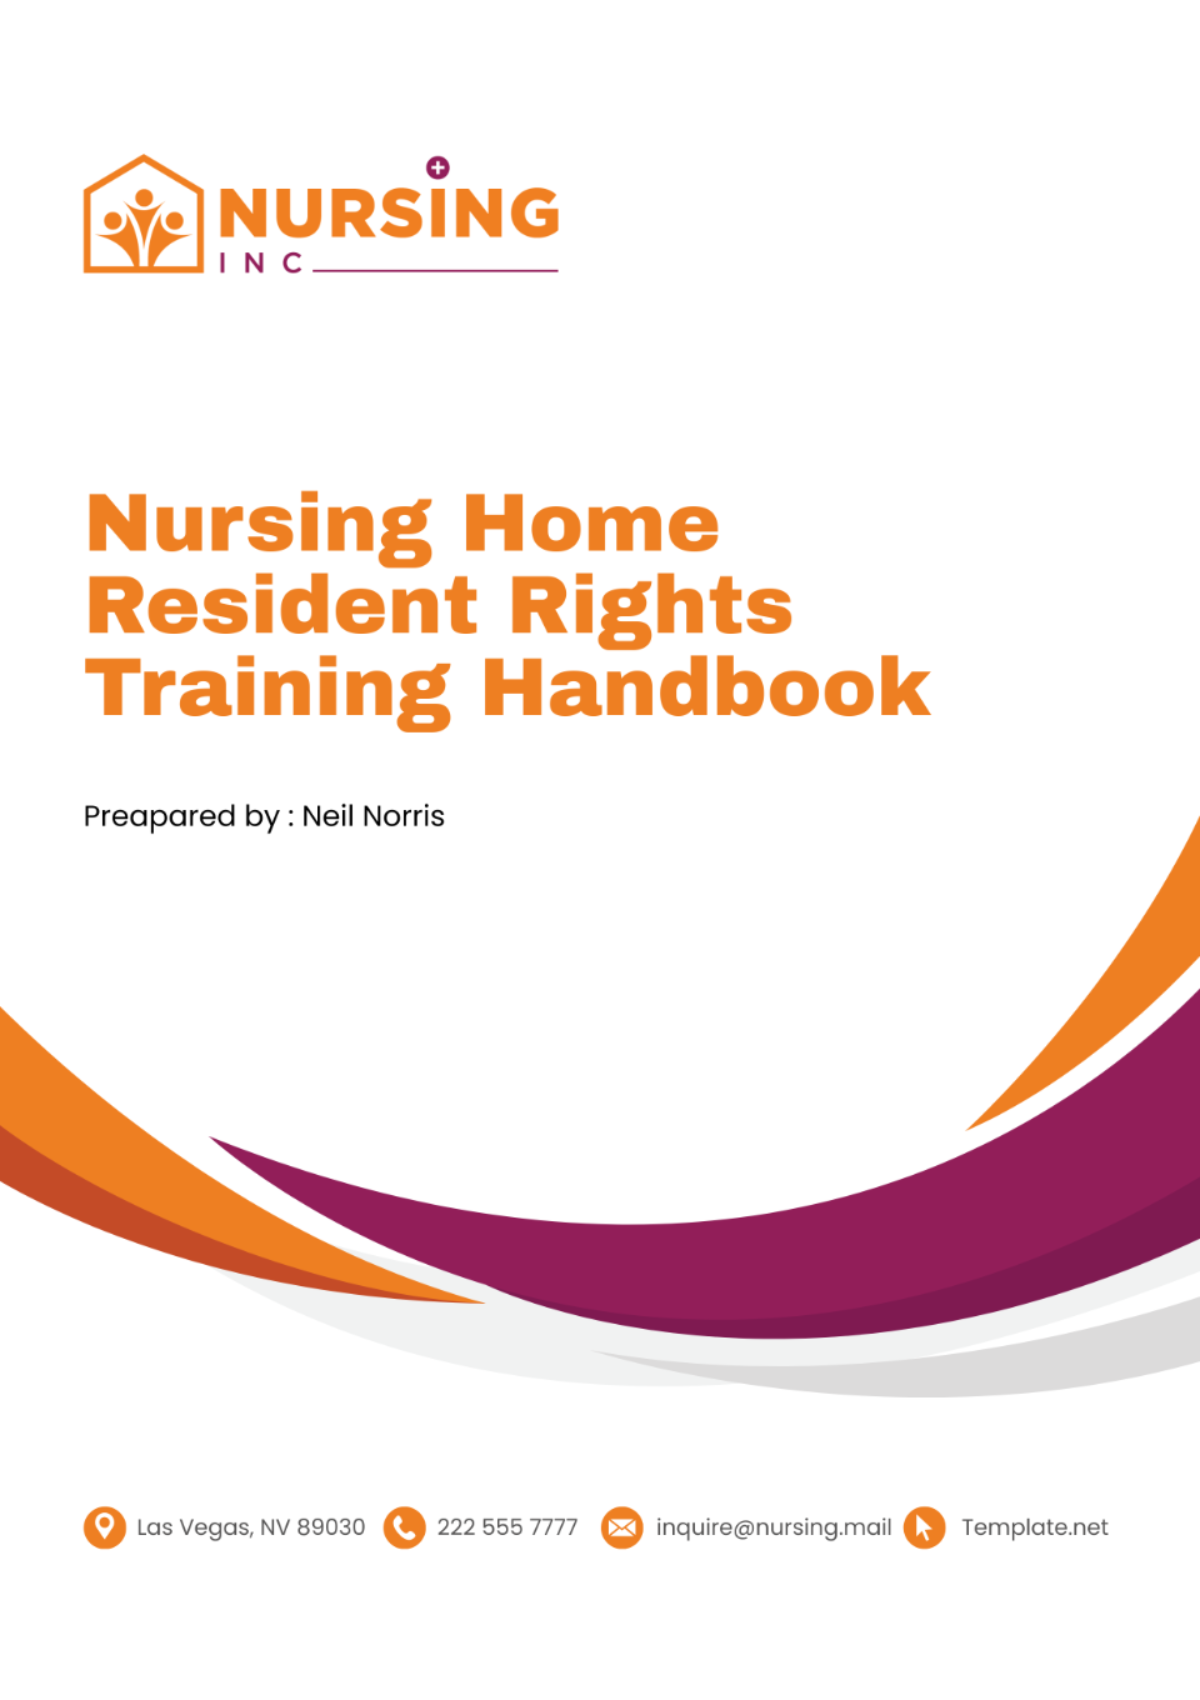 Nursing Home Resident Rights Training Handbook Template